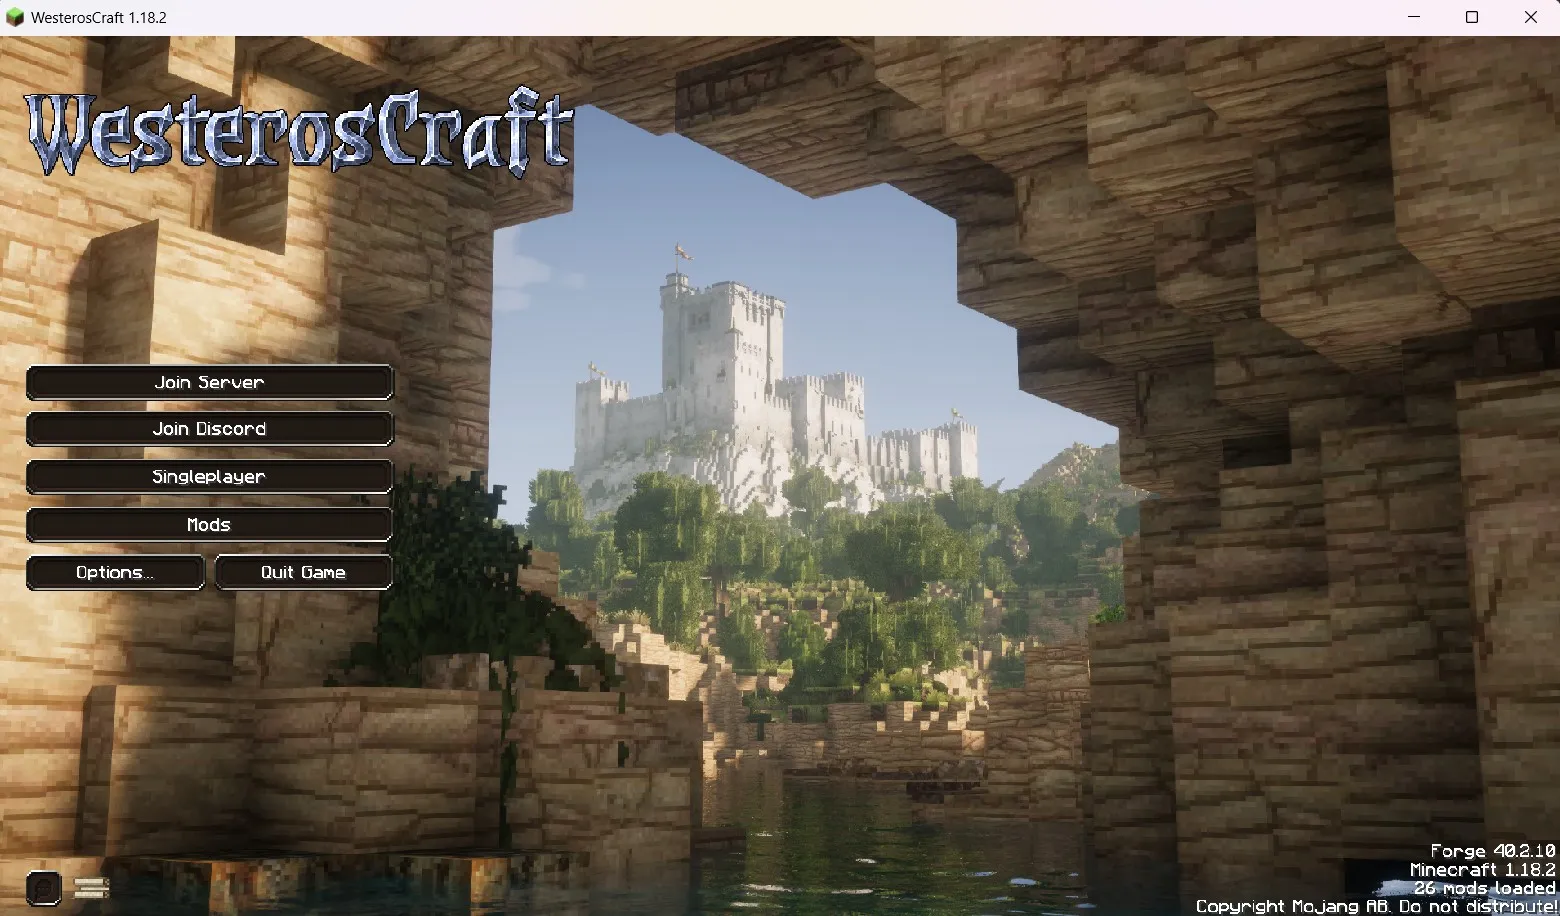 A screenshot of the WesterosCraft modpack launch screen